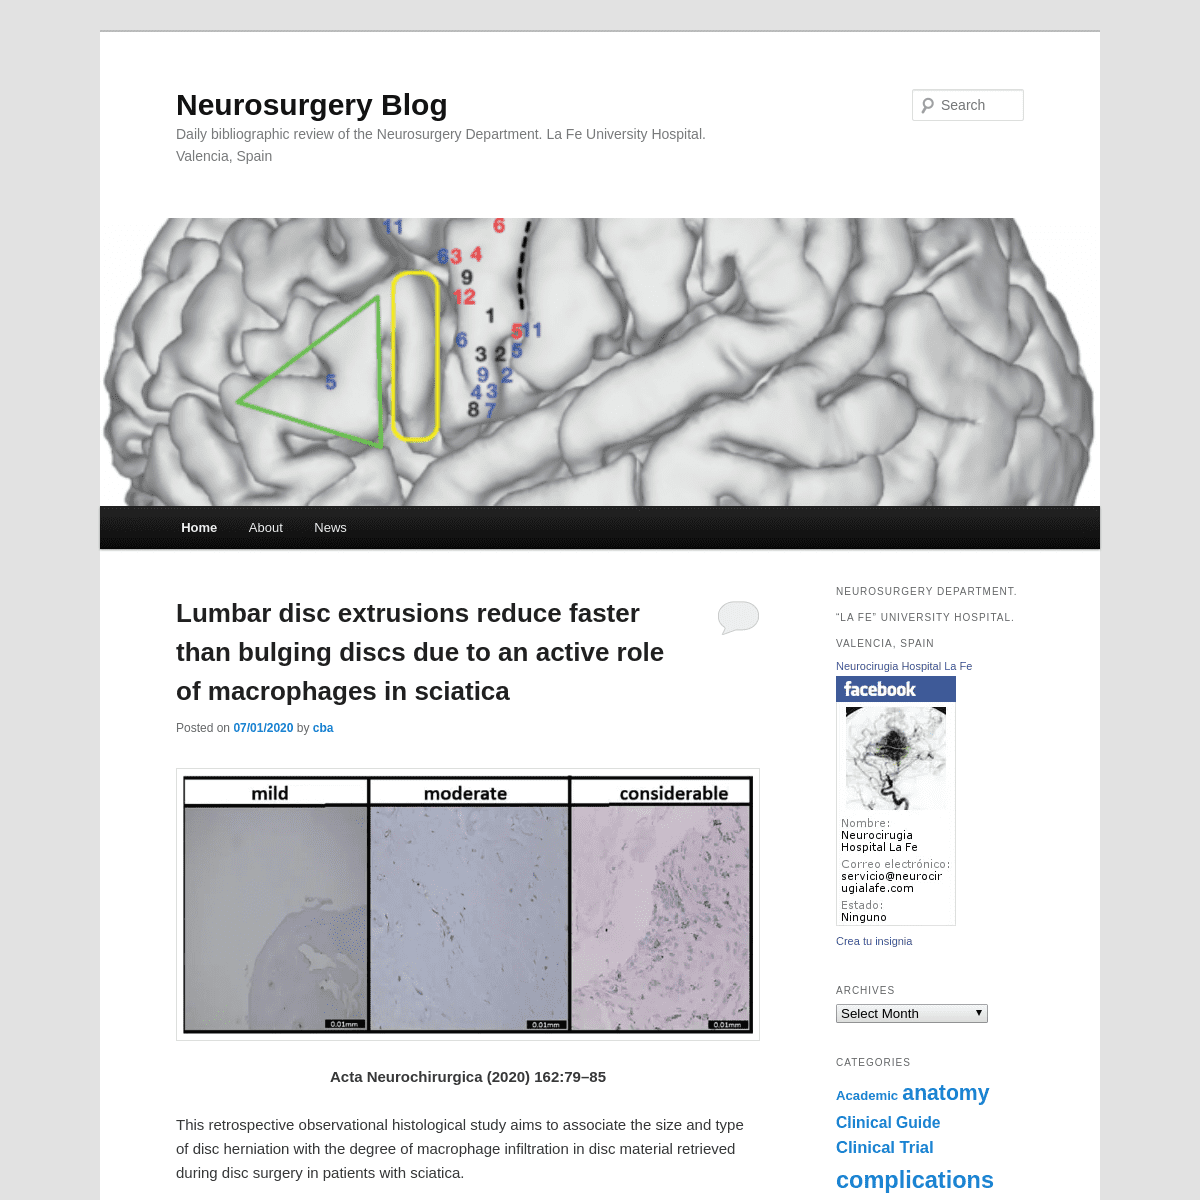 A complete backup of neurosurgery-blog.com